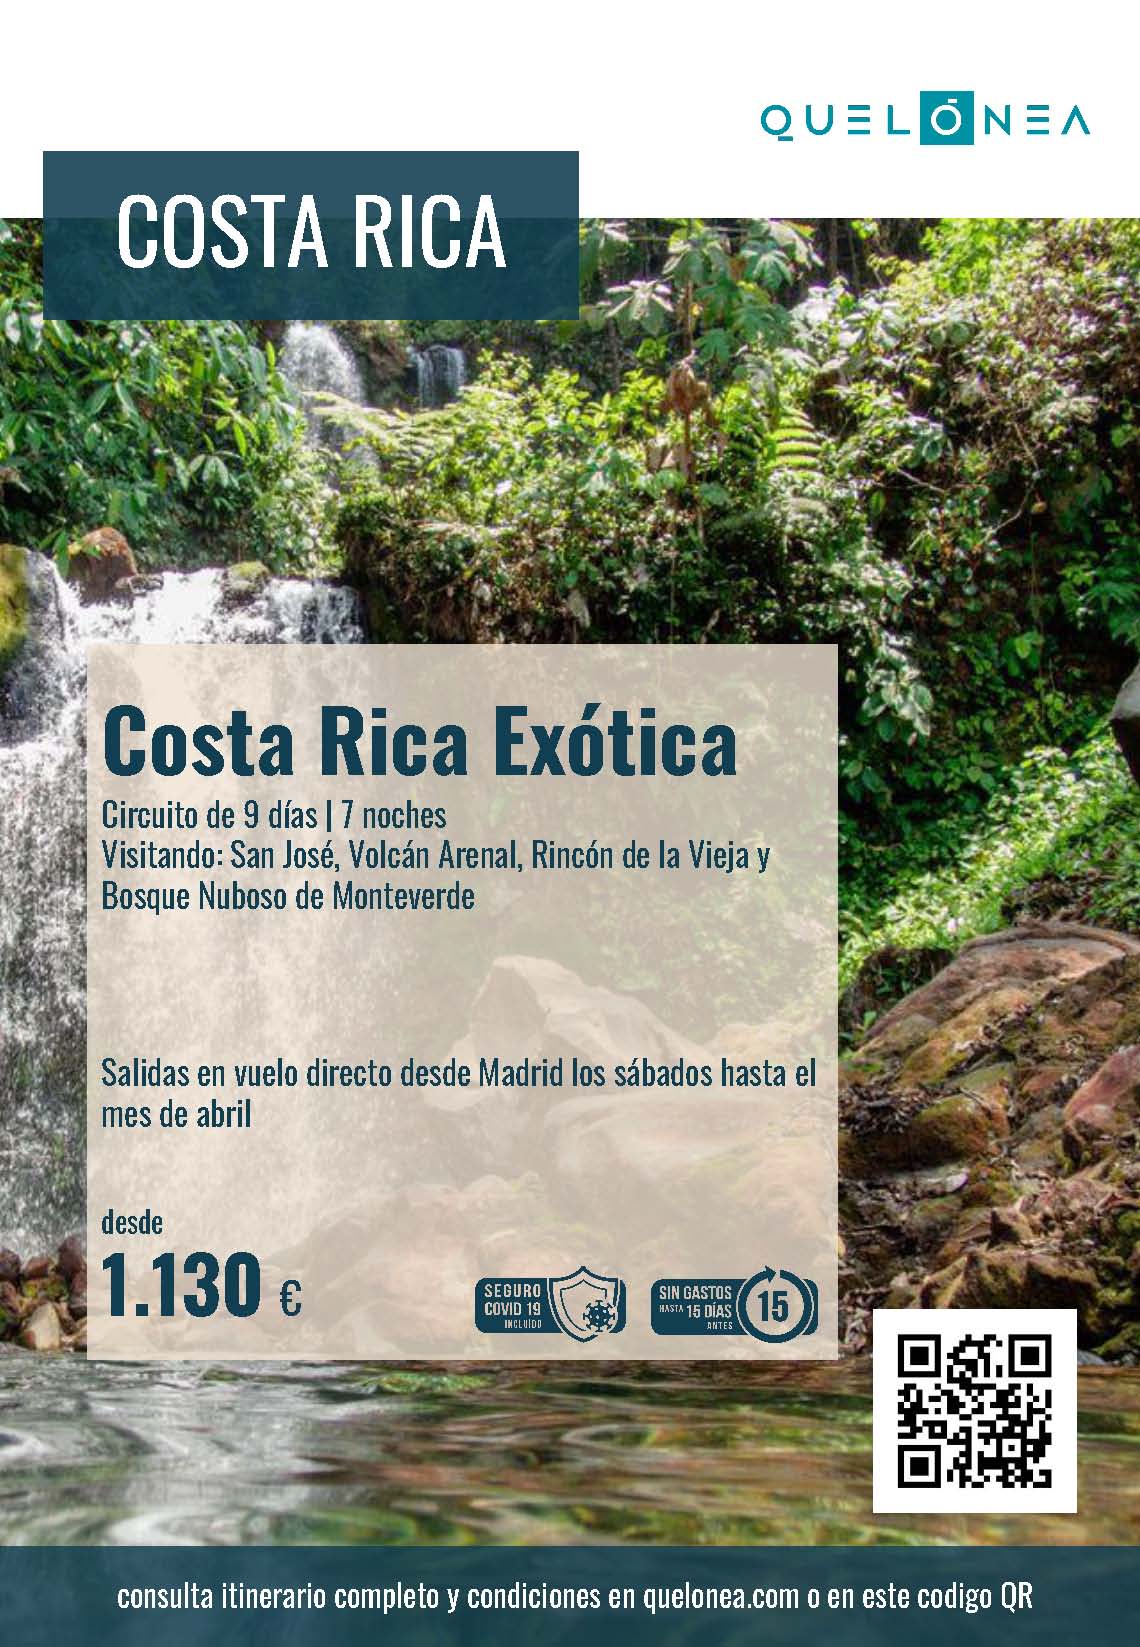 Oferta Quelonea Costa Rica Exotica Noviembre 2021 a Abril 2022 vuelo directo desde Madrid